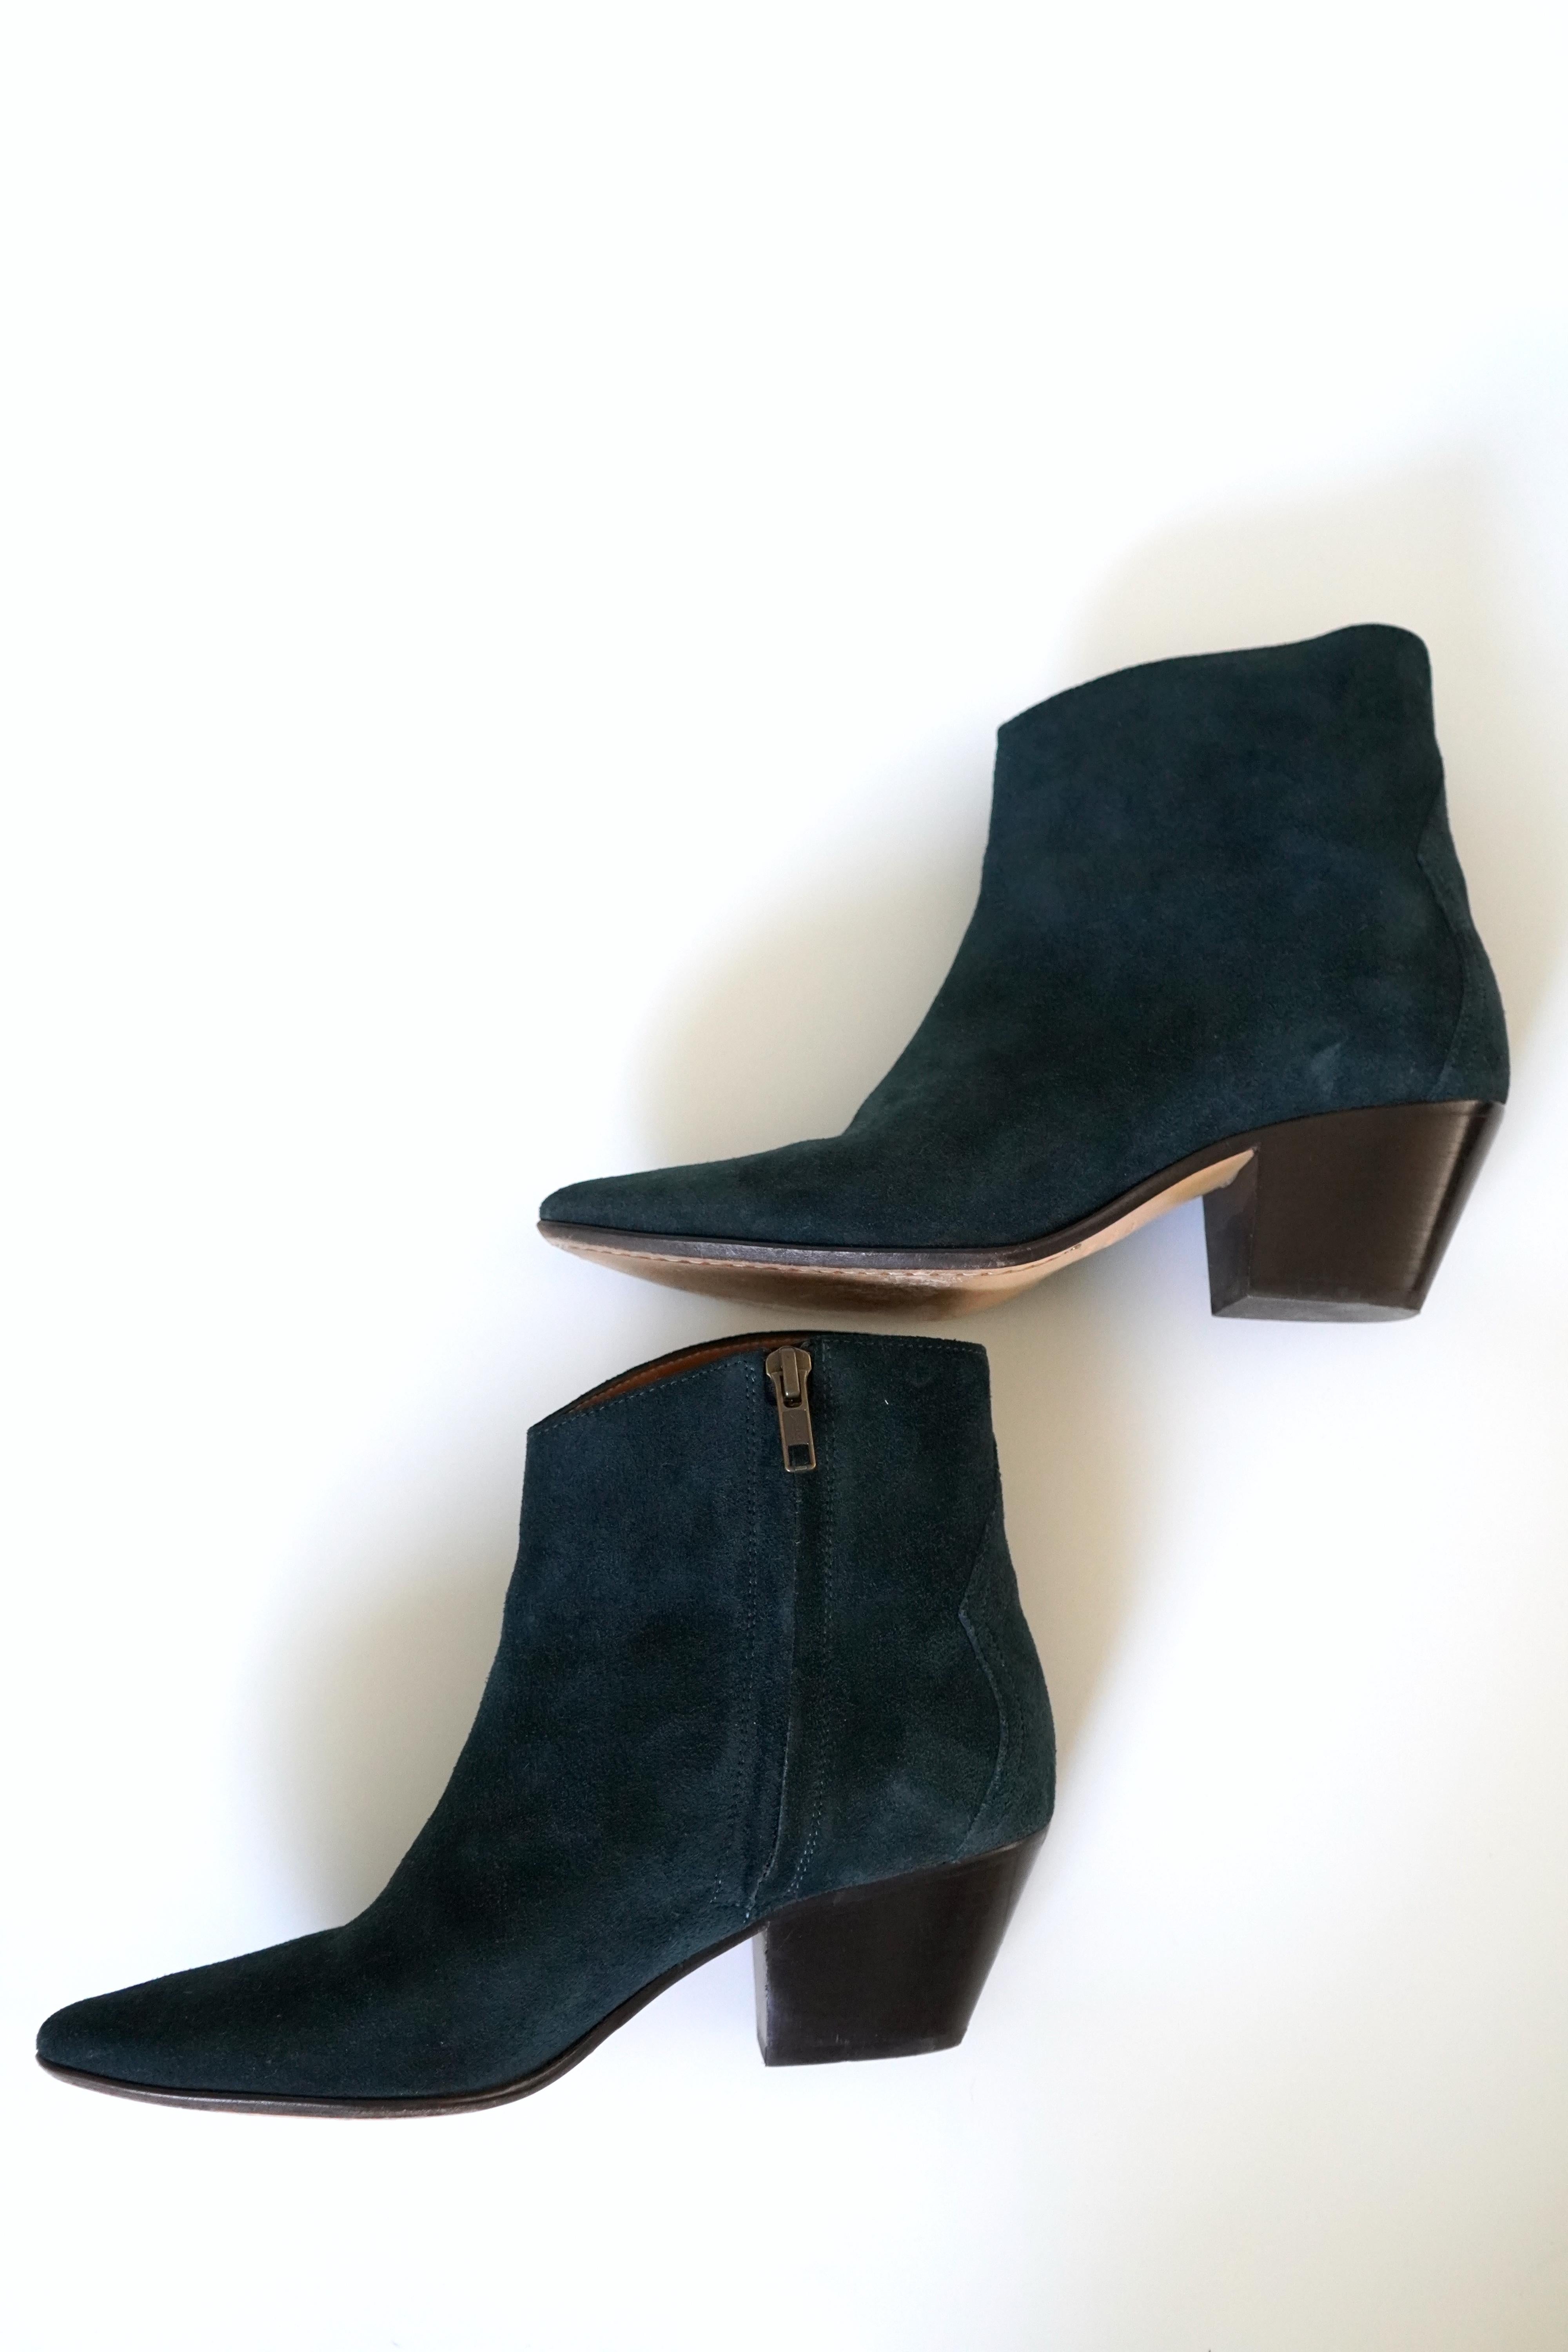 Isabel Marant Velvet Leather Ankle Boots 39 For Sale 2